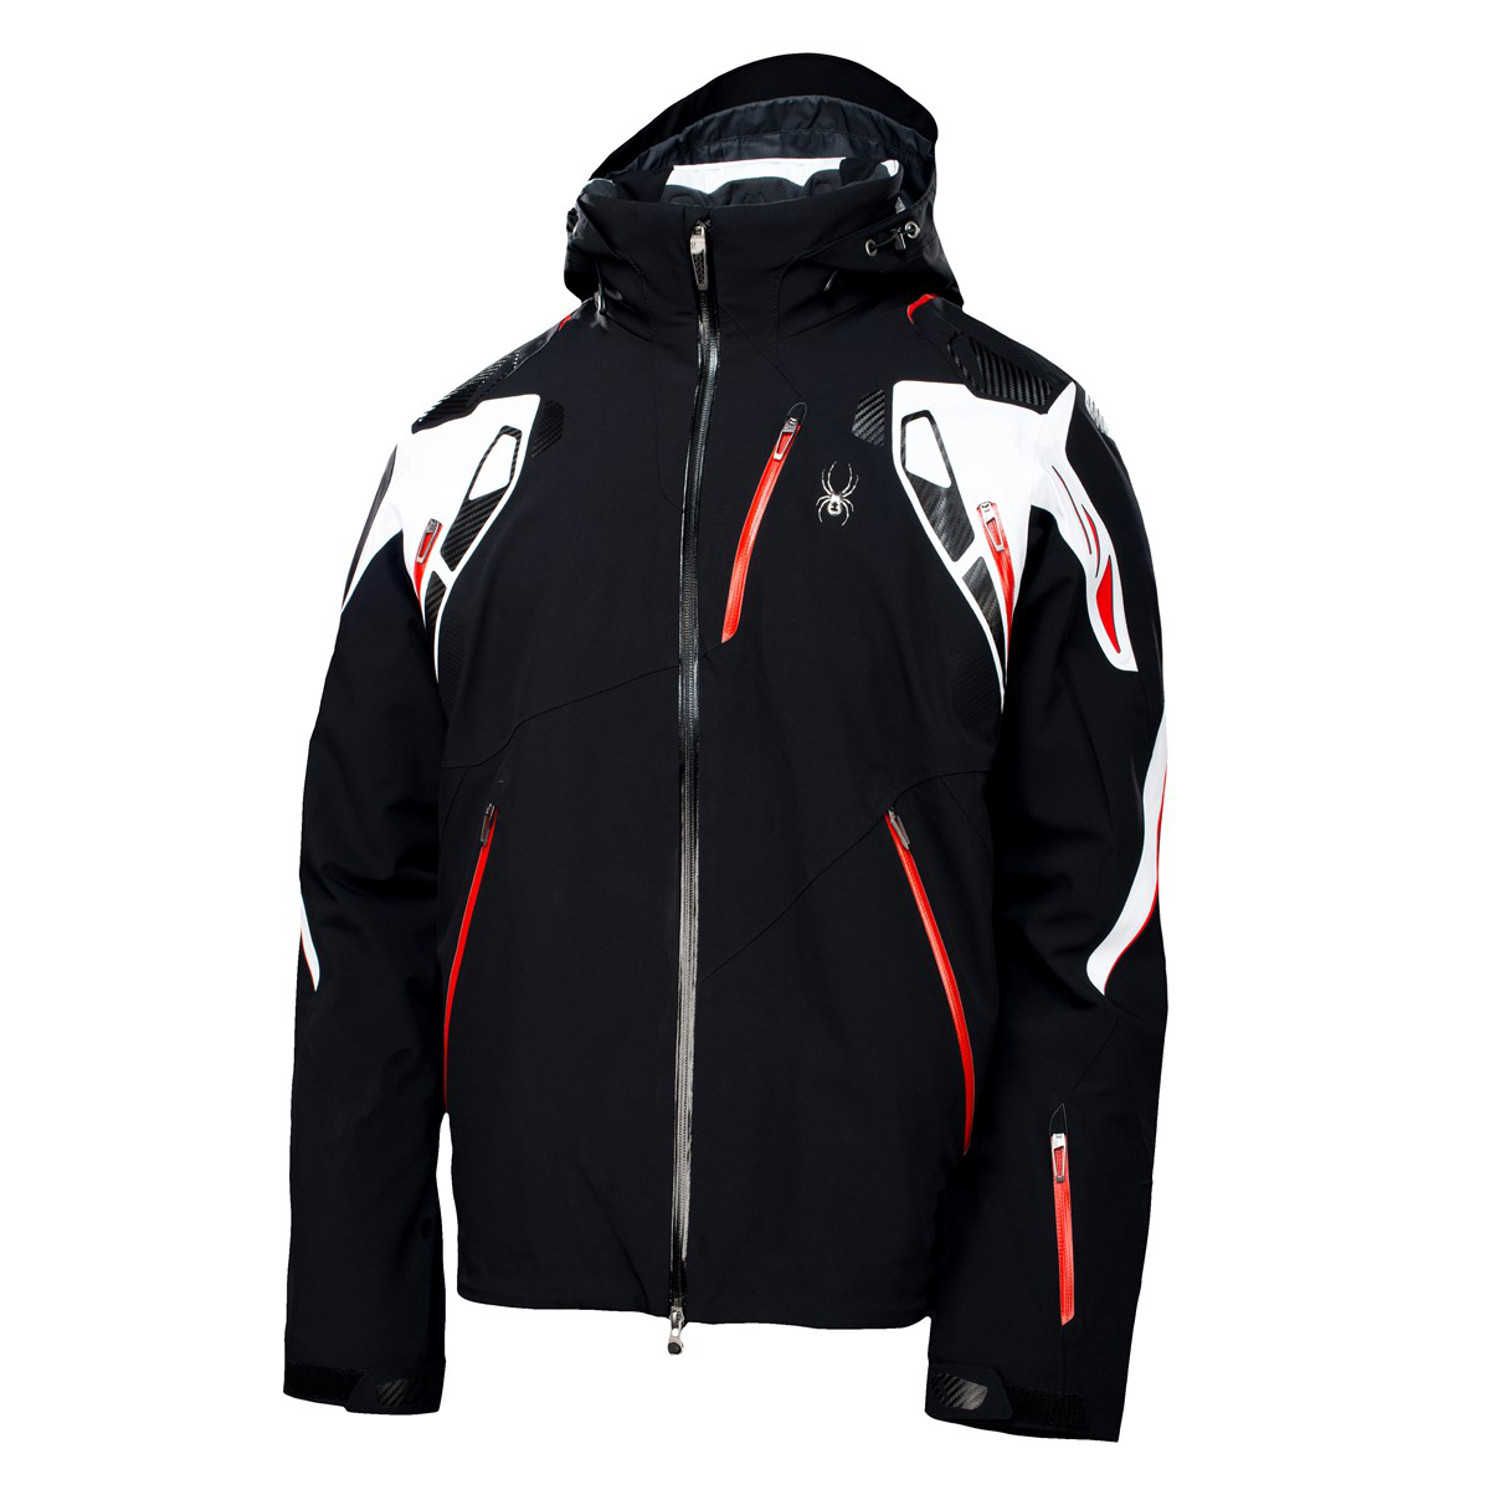 Veste de ski Pinnacle Spyder - Noir blanc rouge SPYDER - Sports